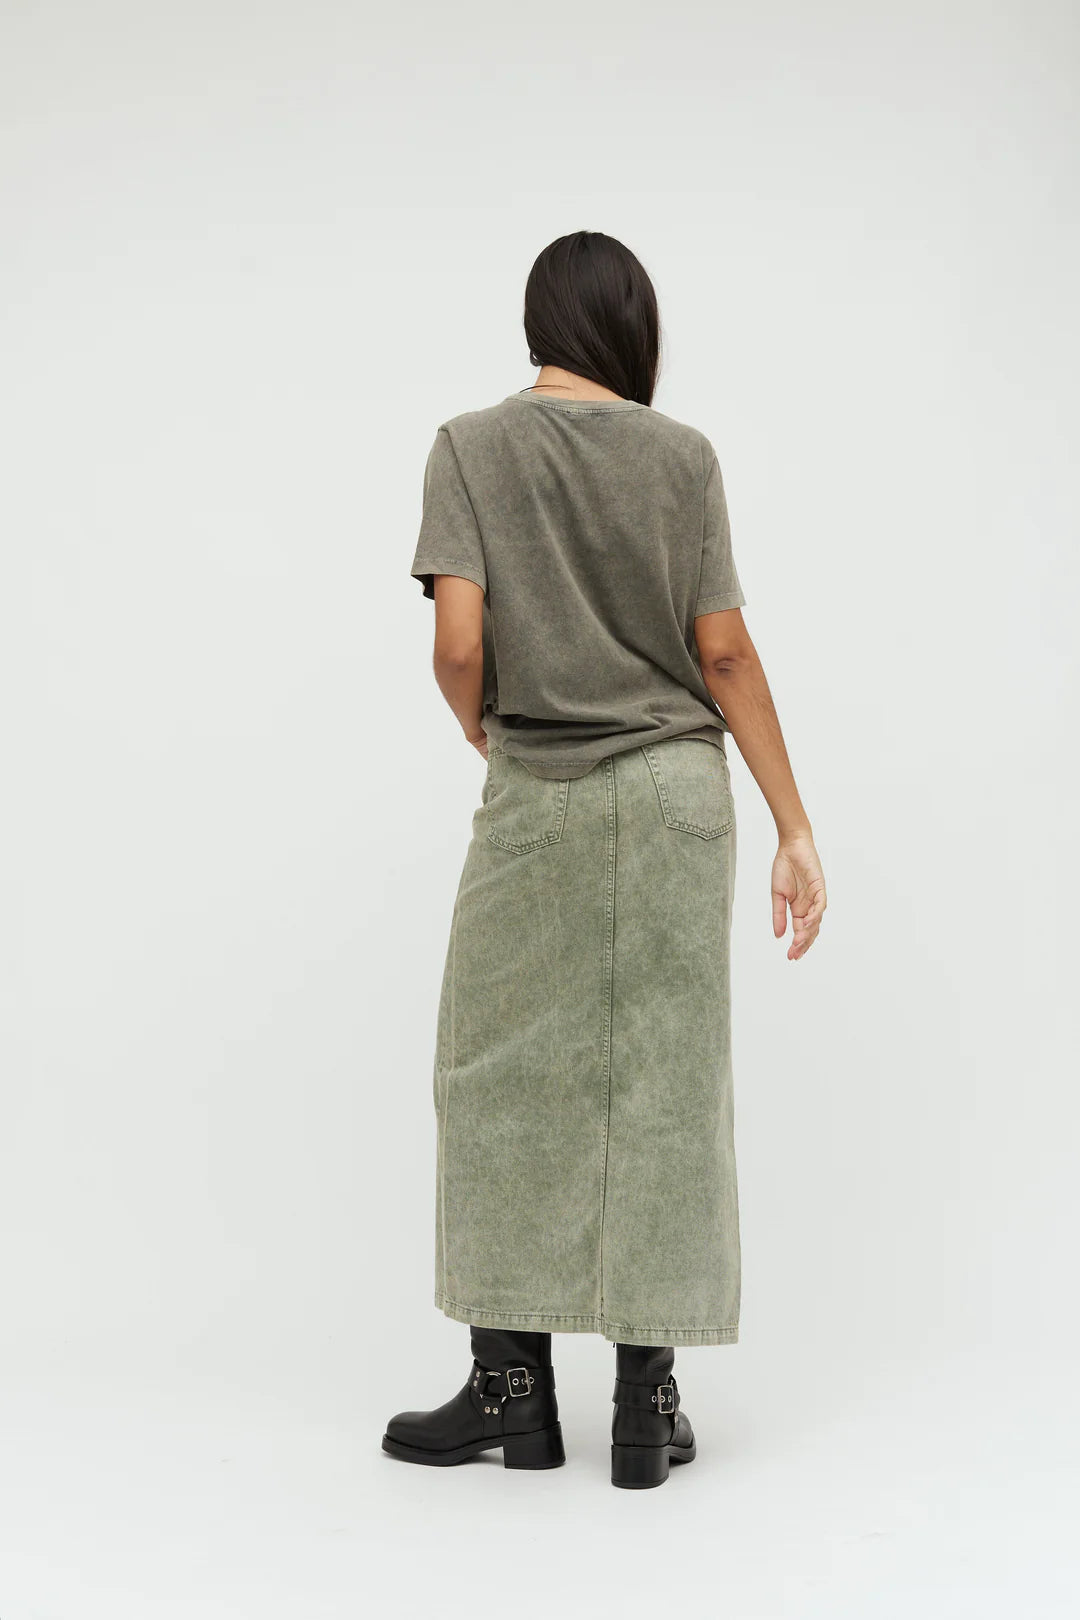 MBYM Auriga Lopa Long-M Skirt Iguana Green Wash